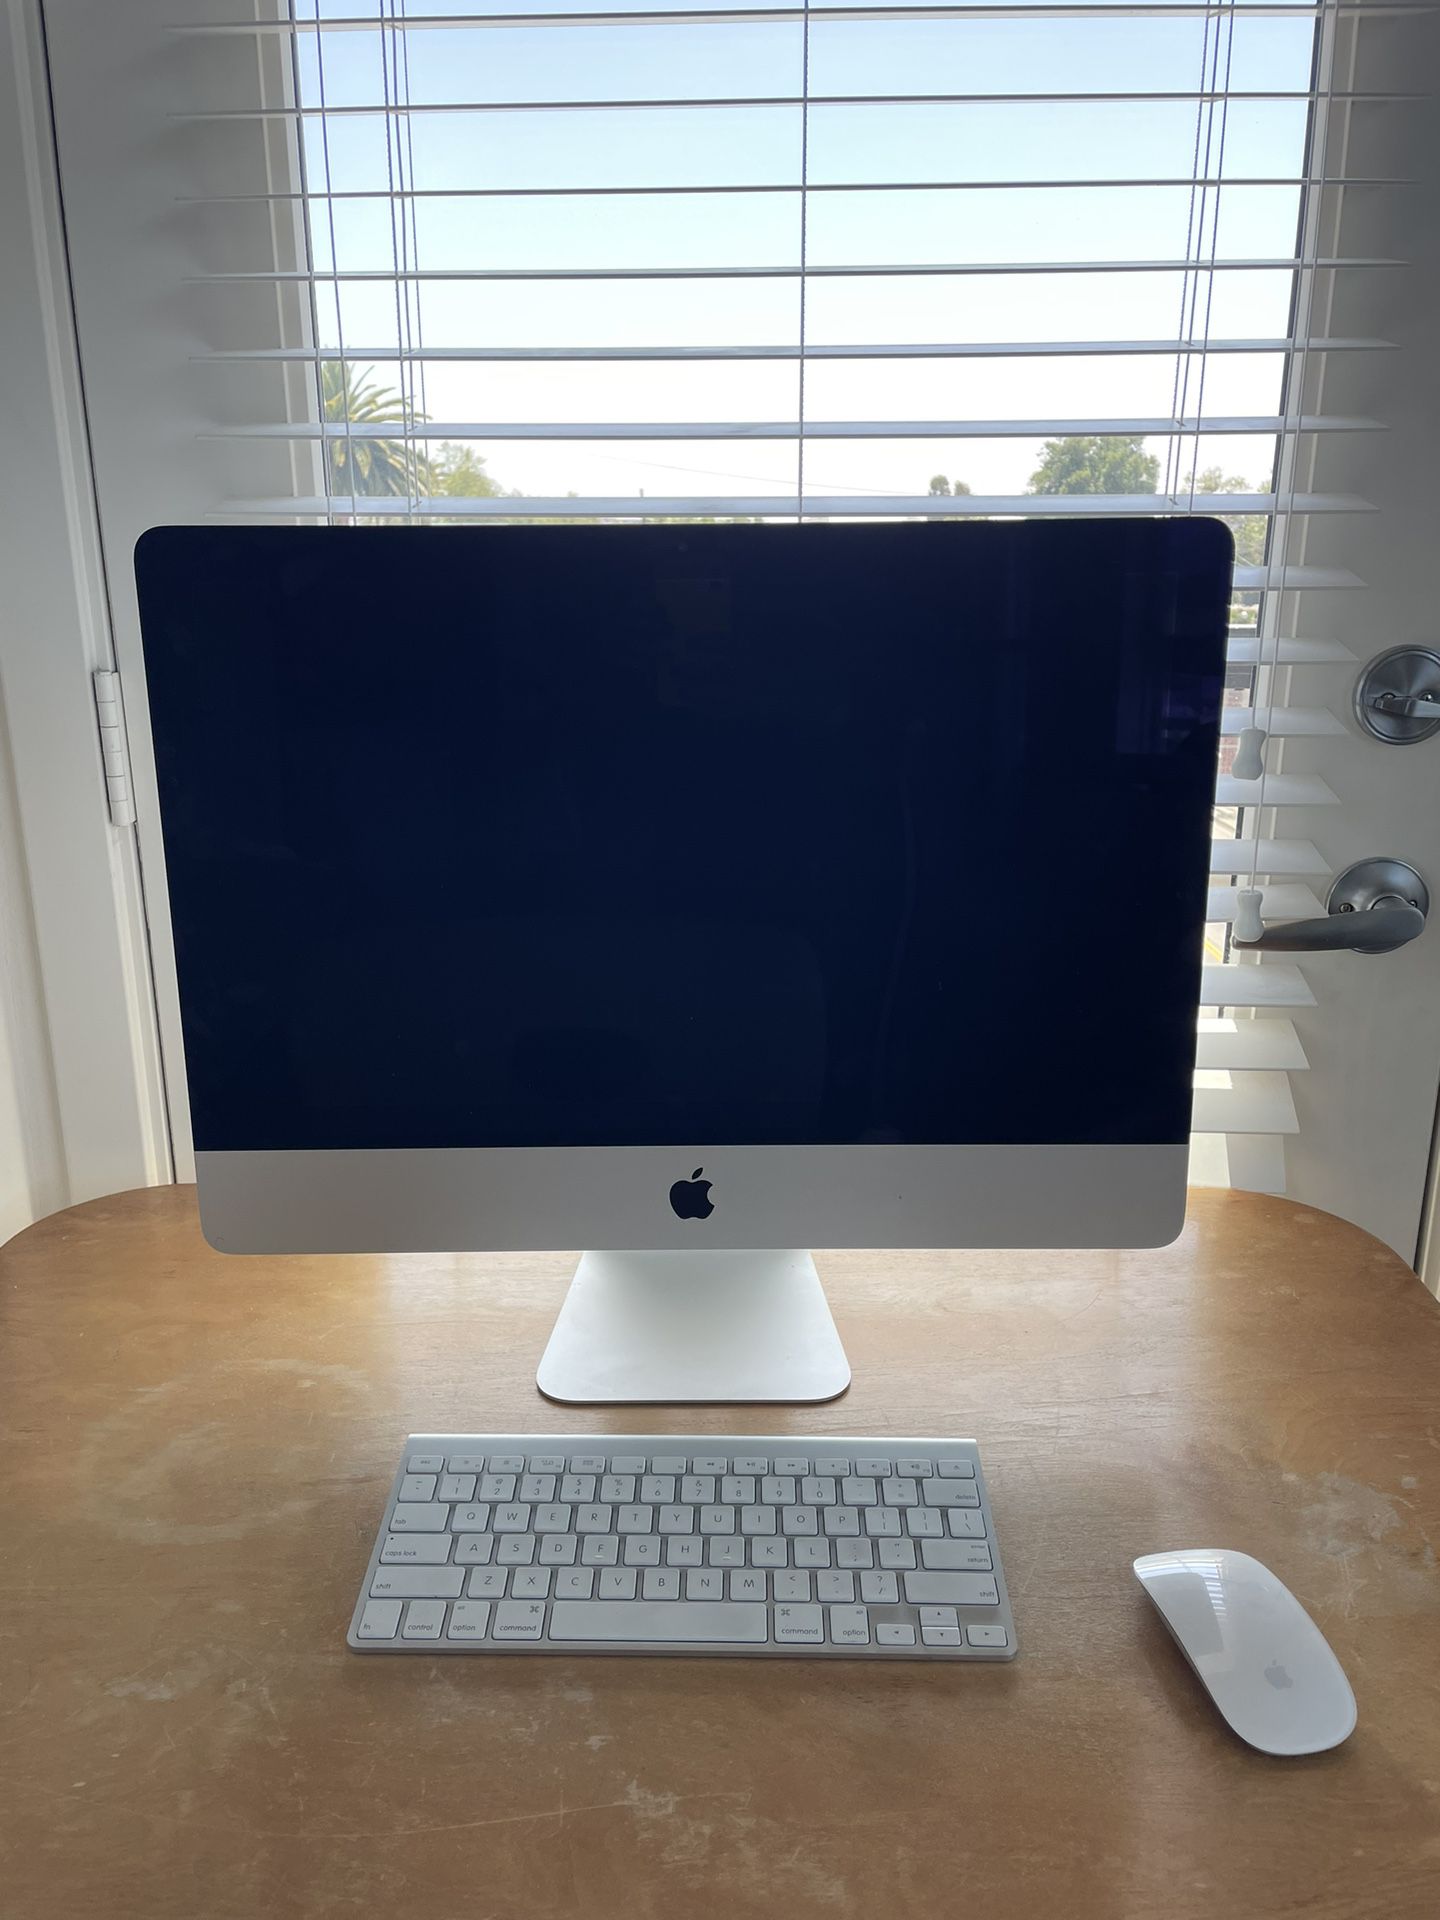 21.5 Inch iMac In Factory Settings 